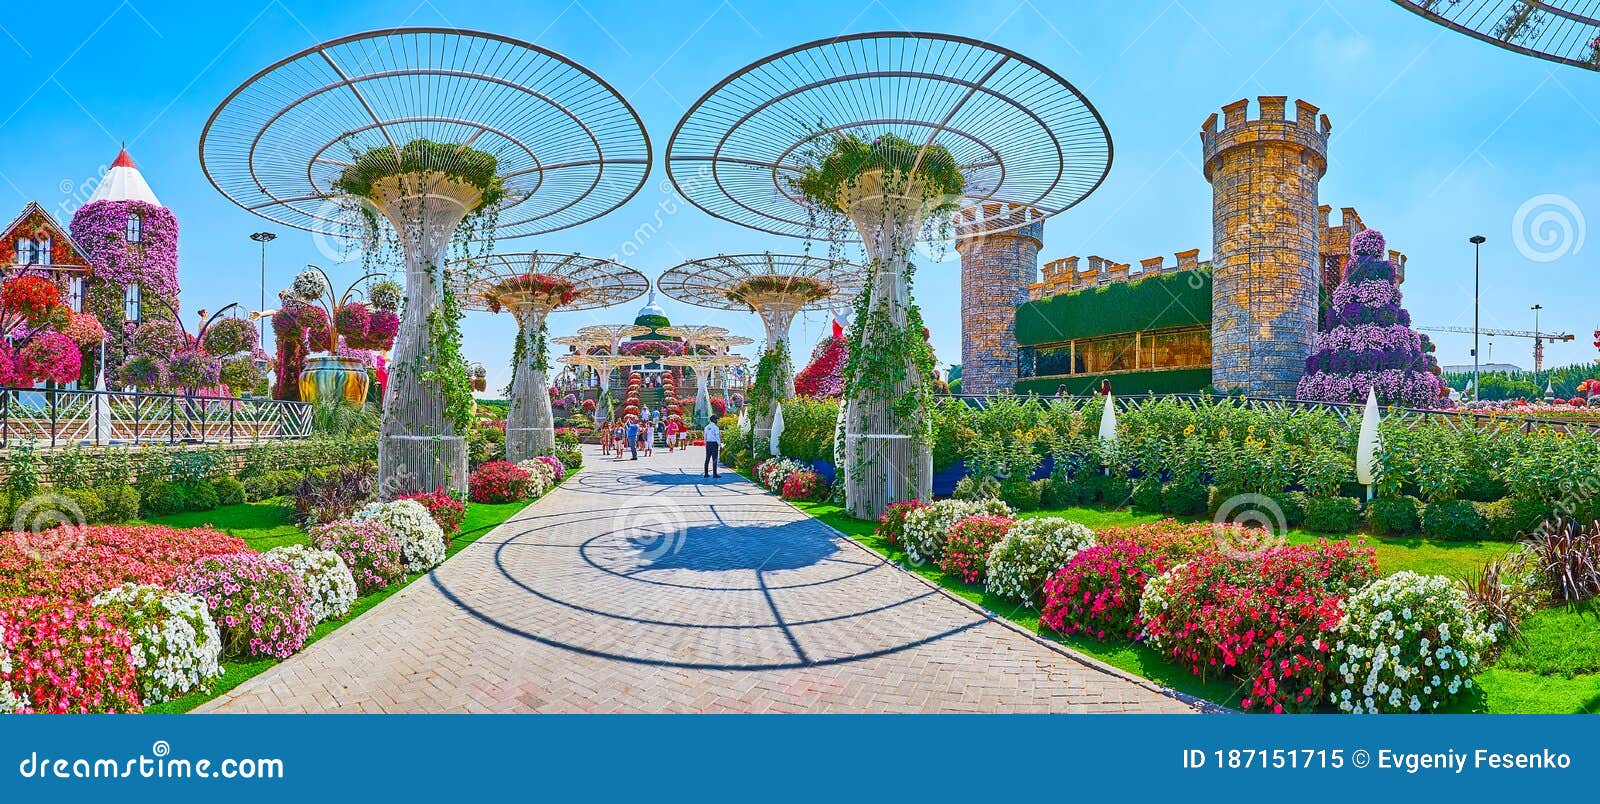 Panorama Of Miracle Garden With Its Landmarks Dubai Uae Editorial Image Image Of Nature Flower 187151715